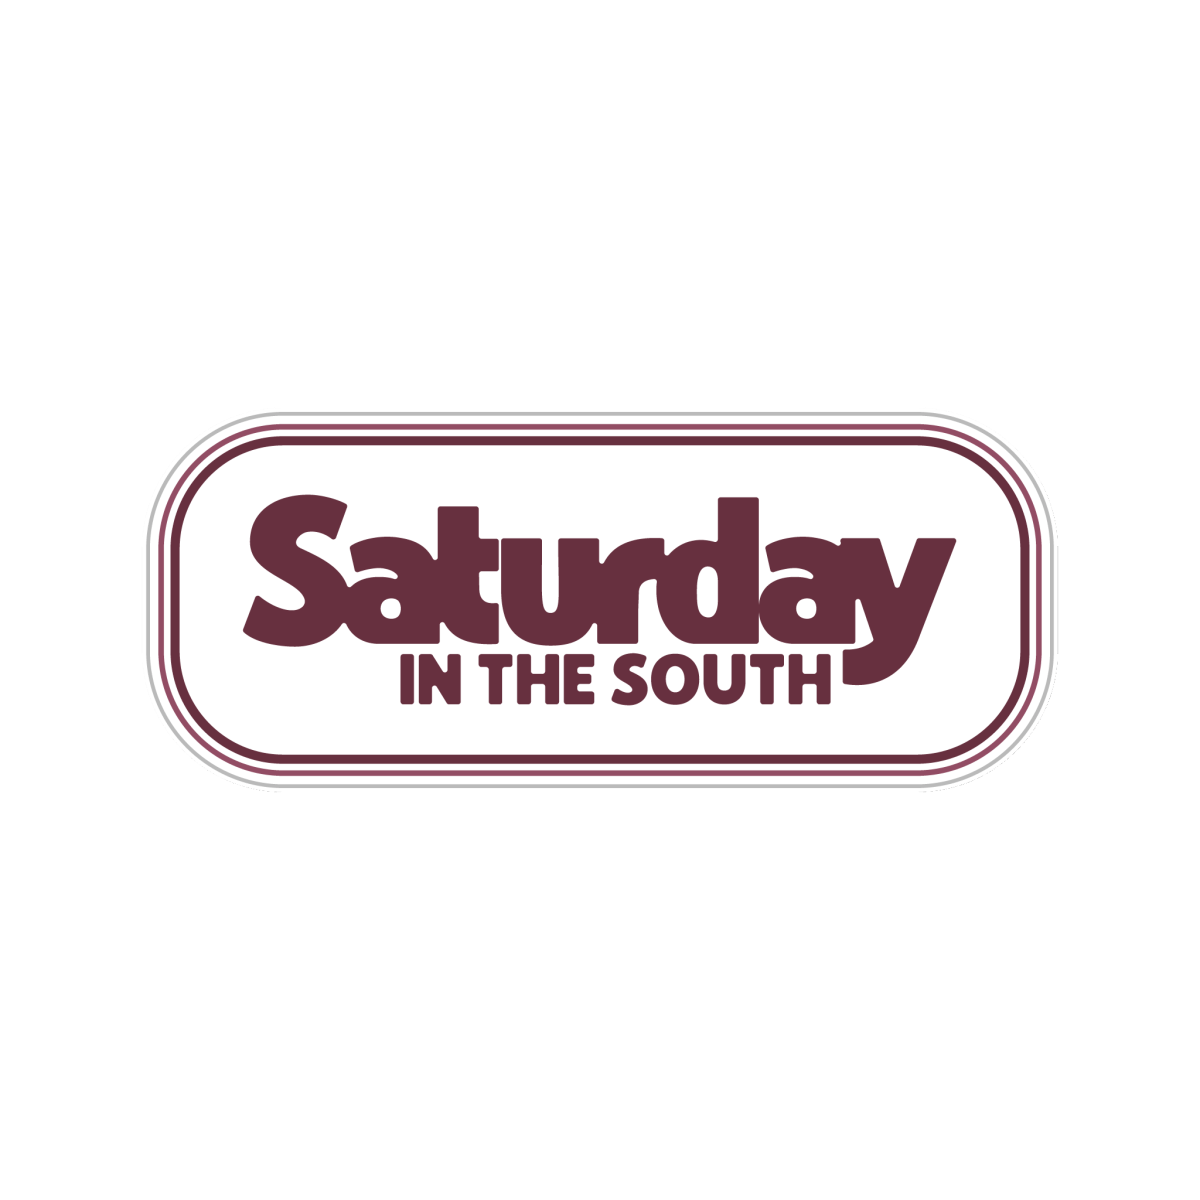 MSU Saturday in the South Sticker - Shop B-Unlimited